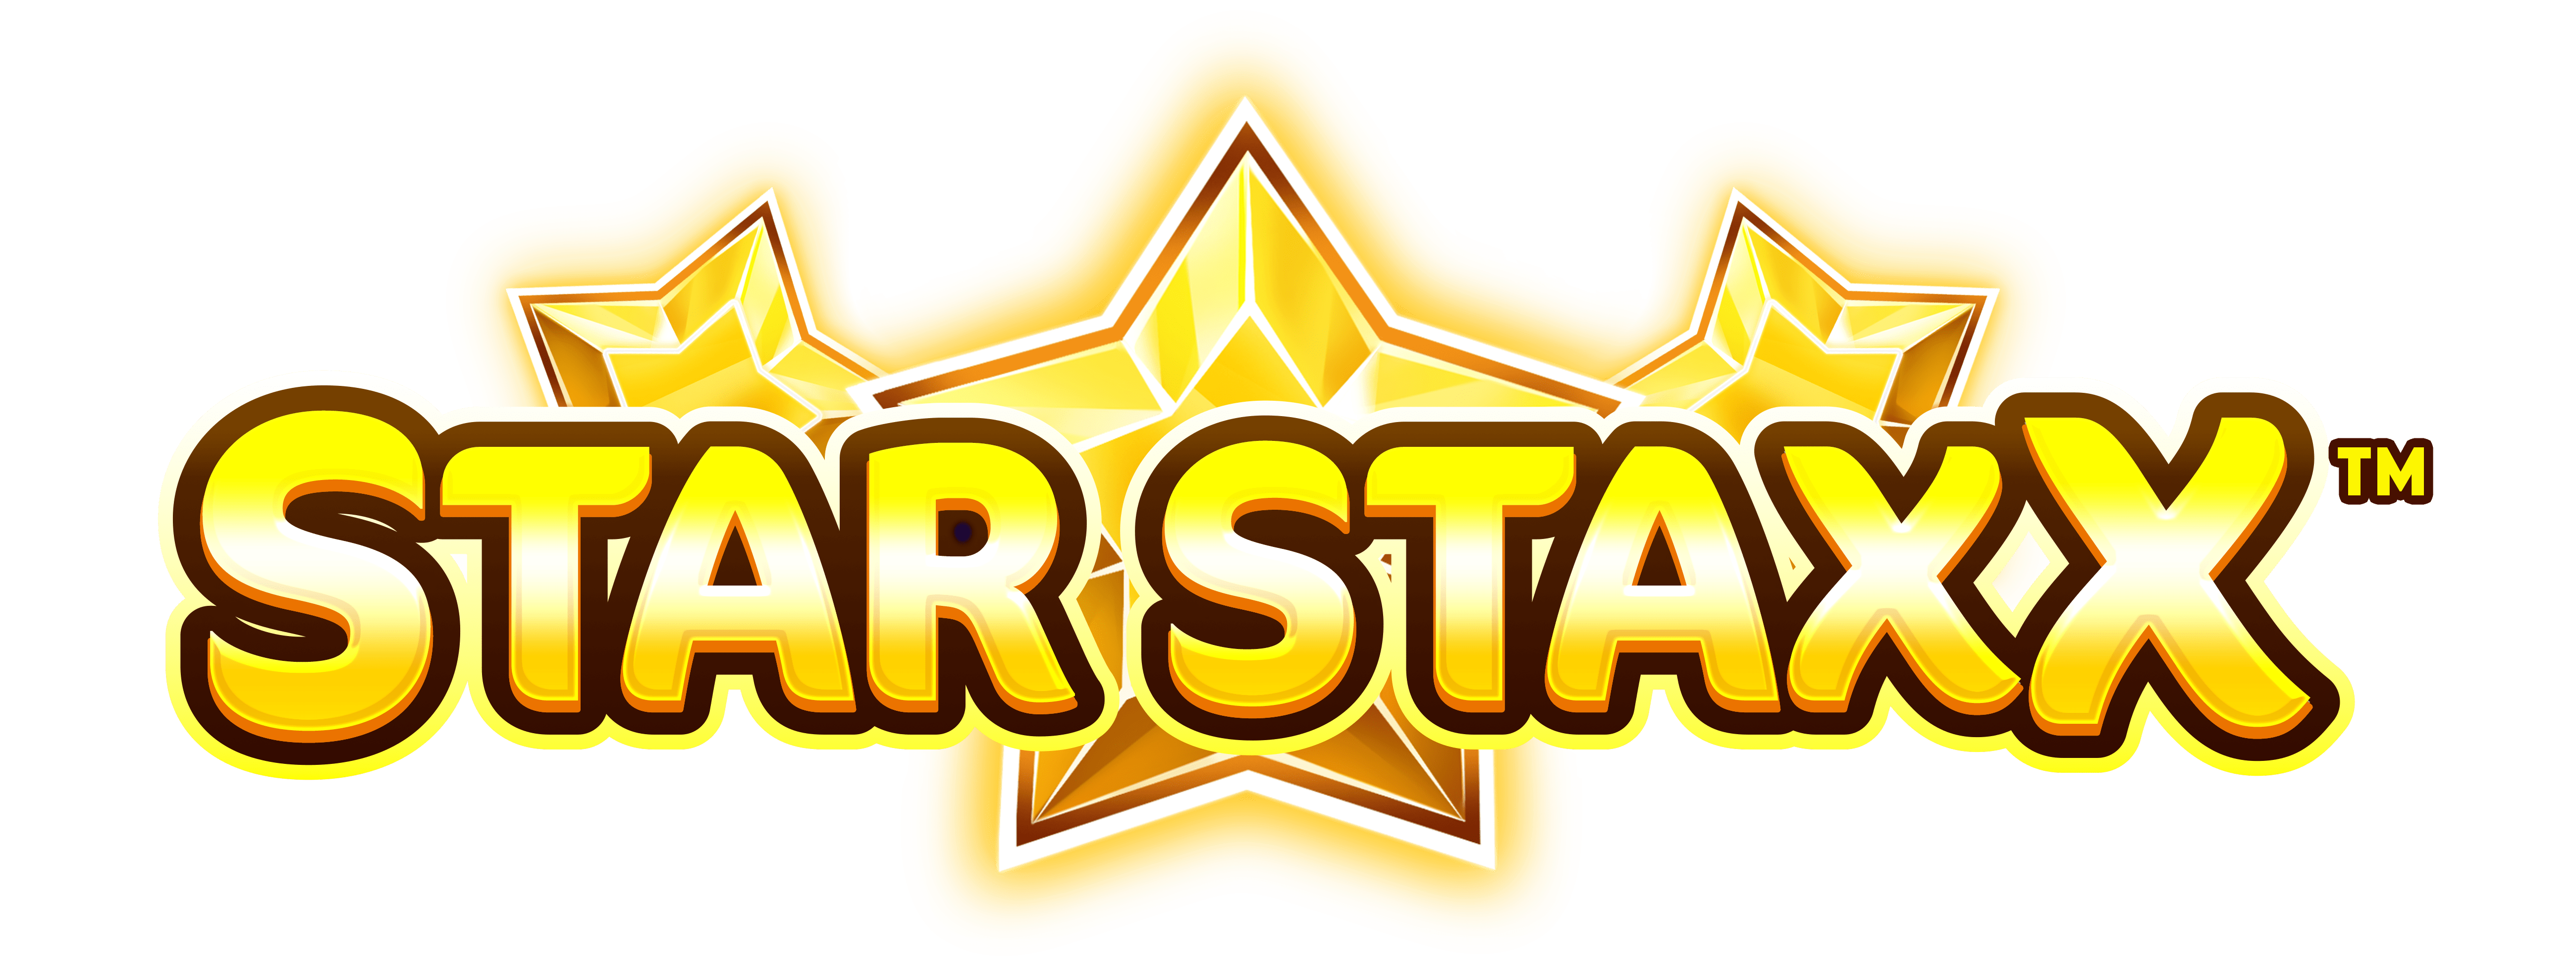 Starstaxx logo